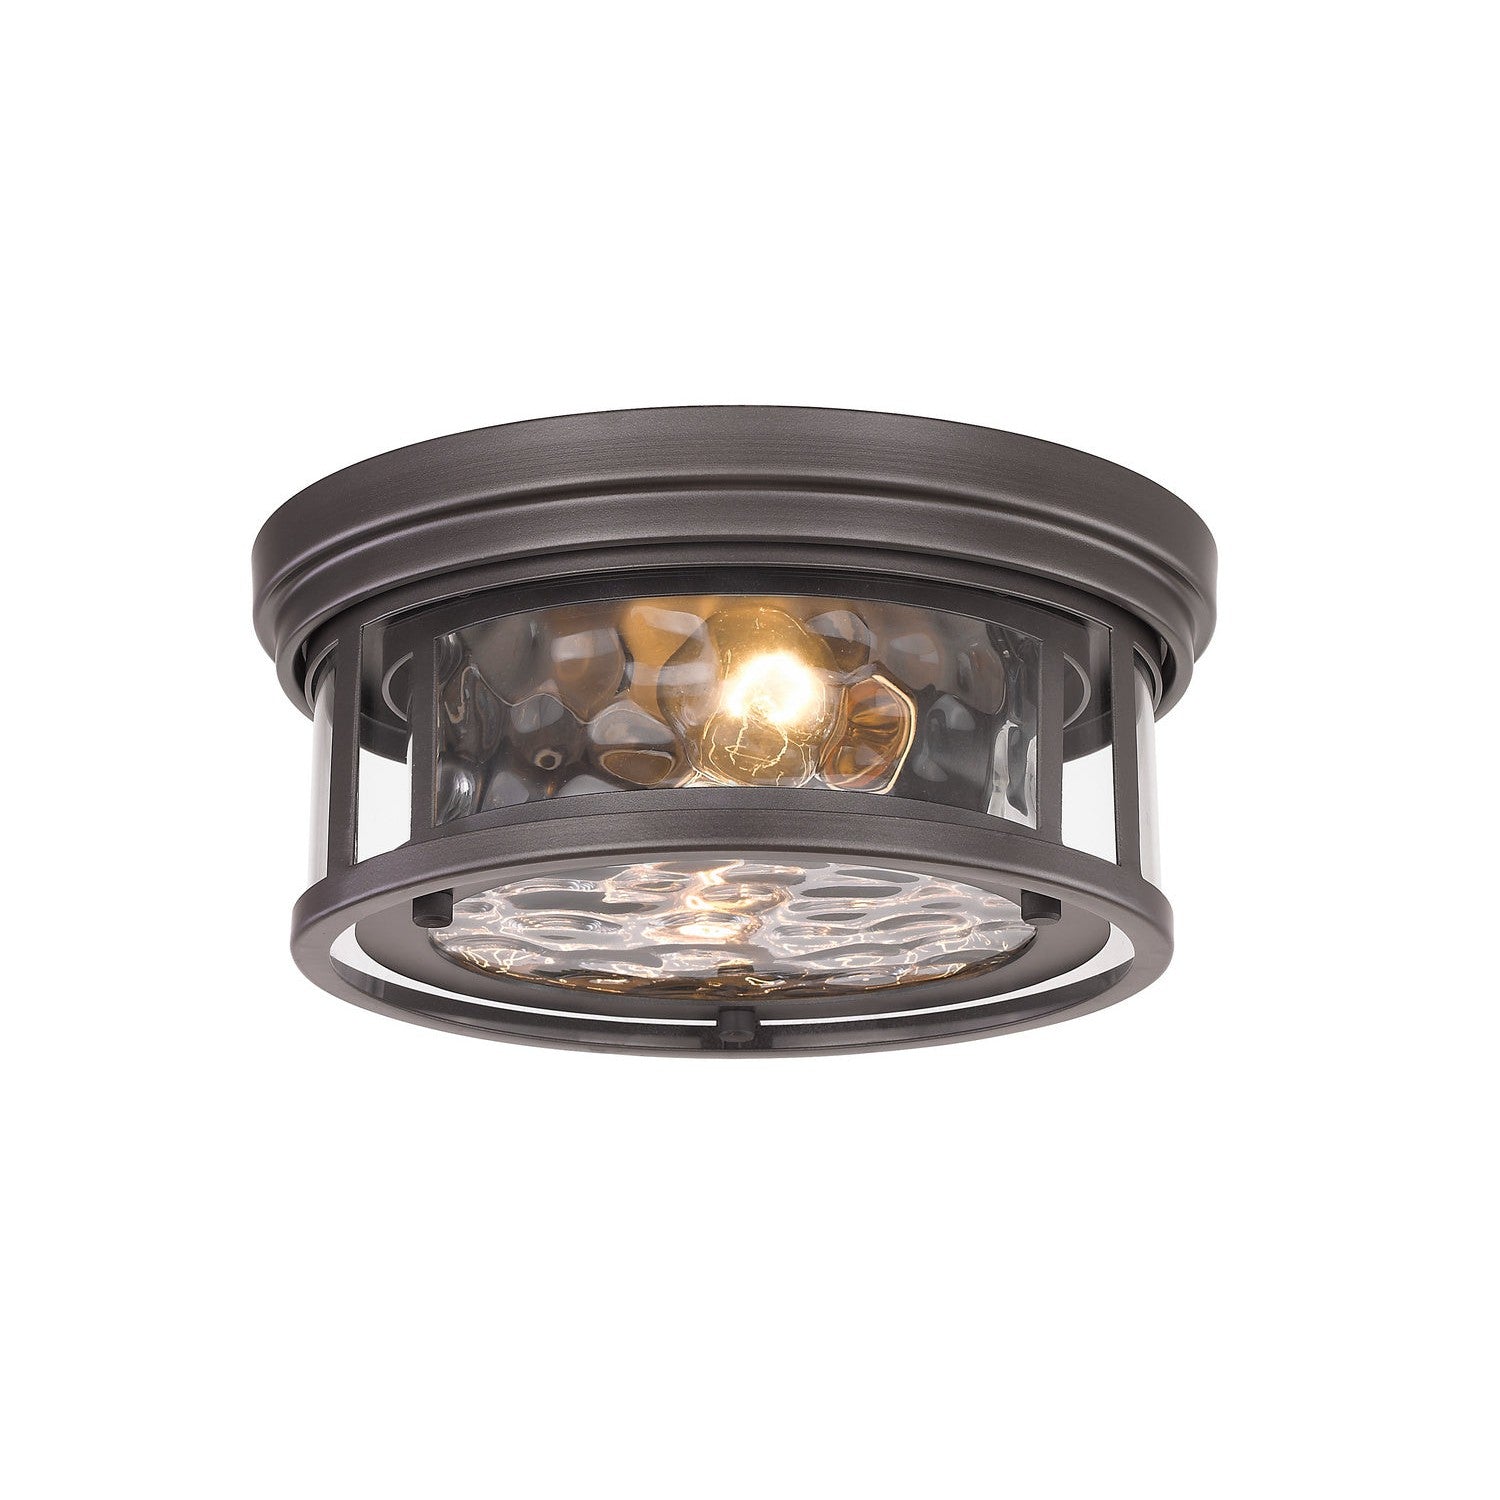 Z-Lite Clarion 493F2-BRZ Ceiling Light - Bronze